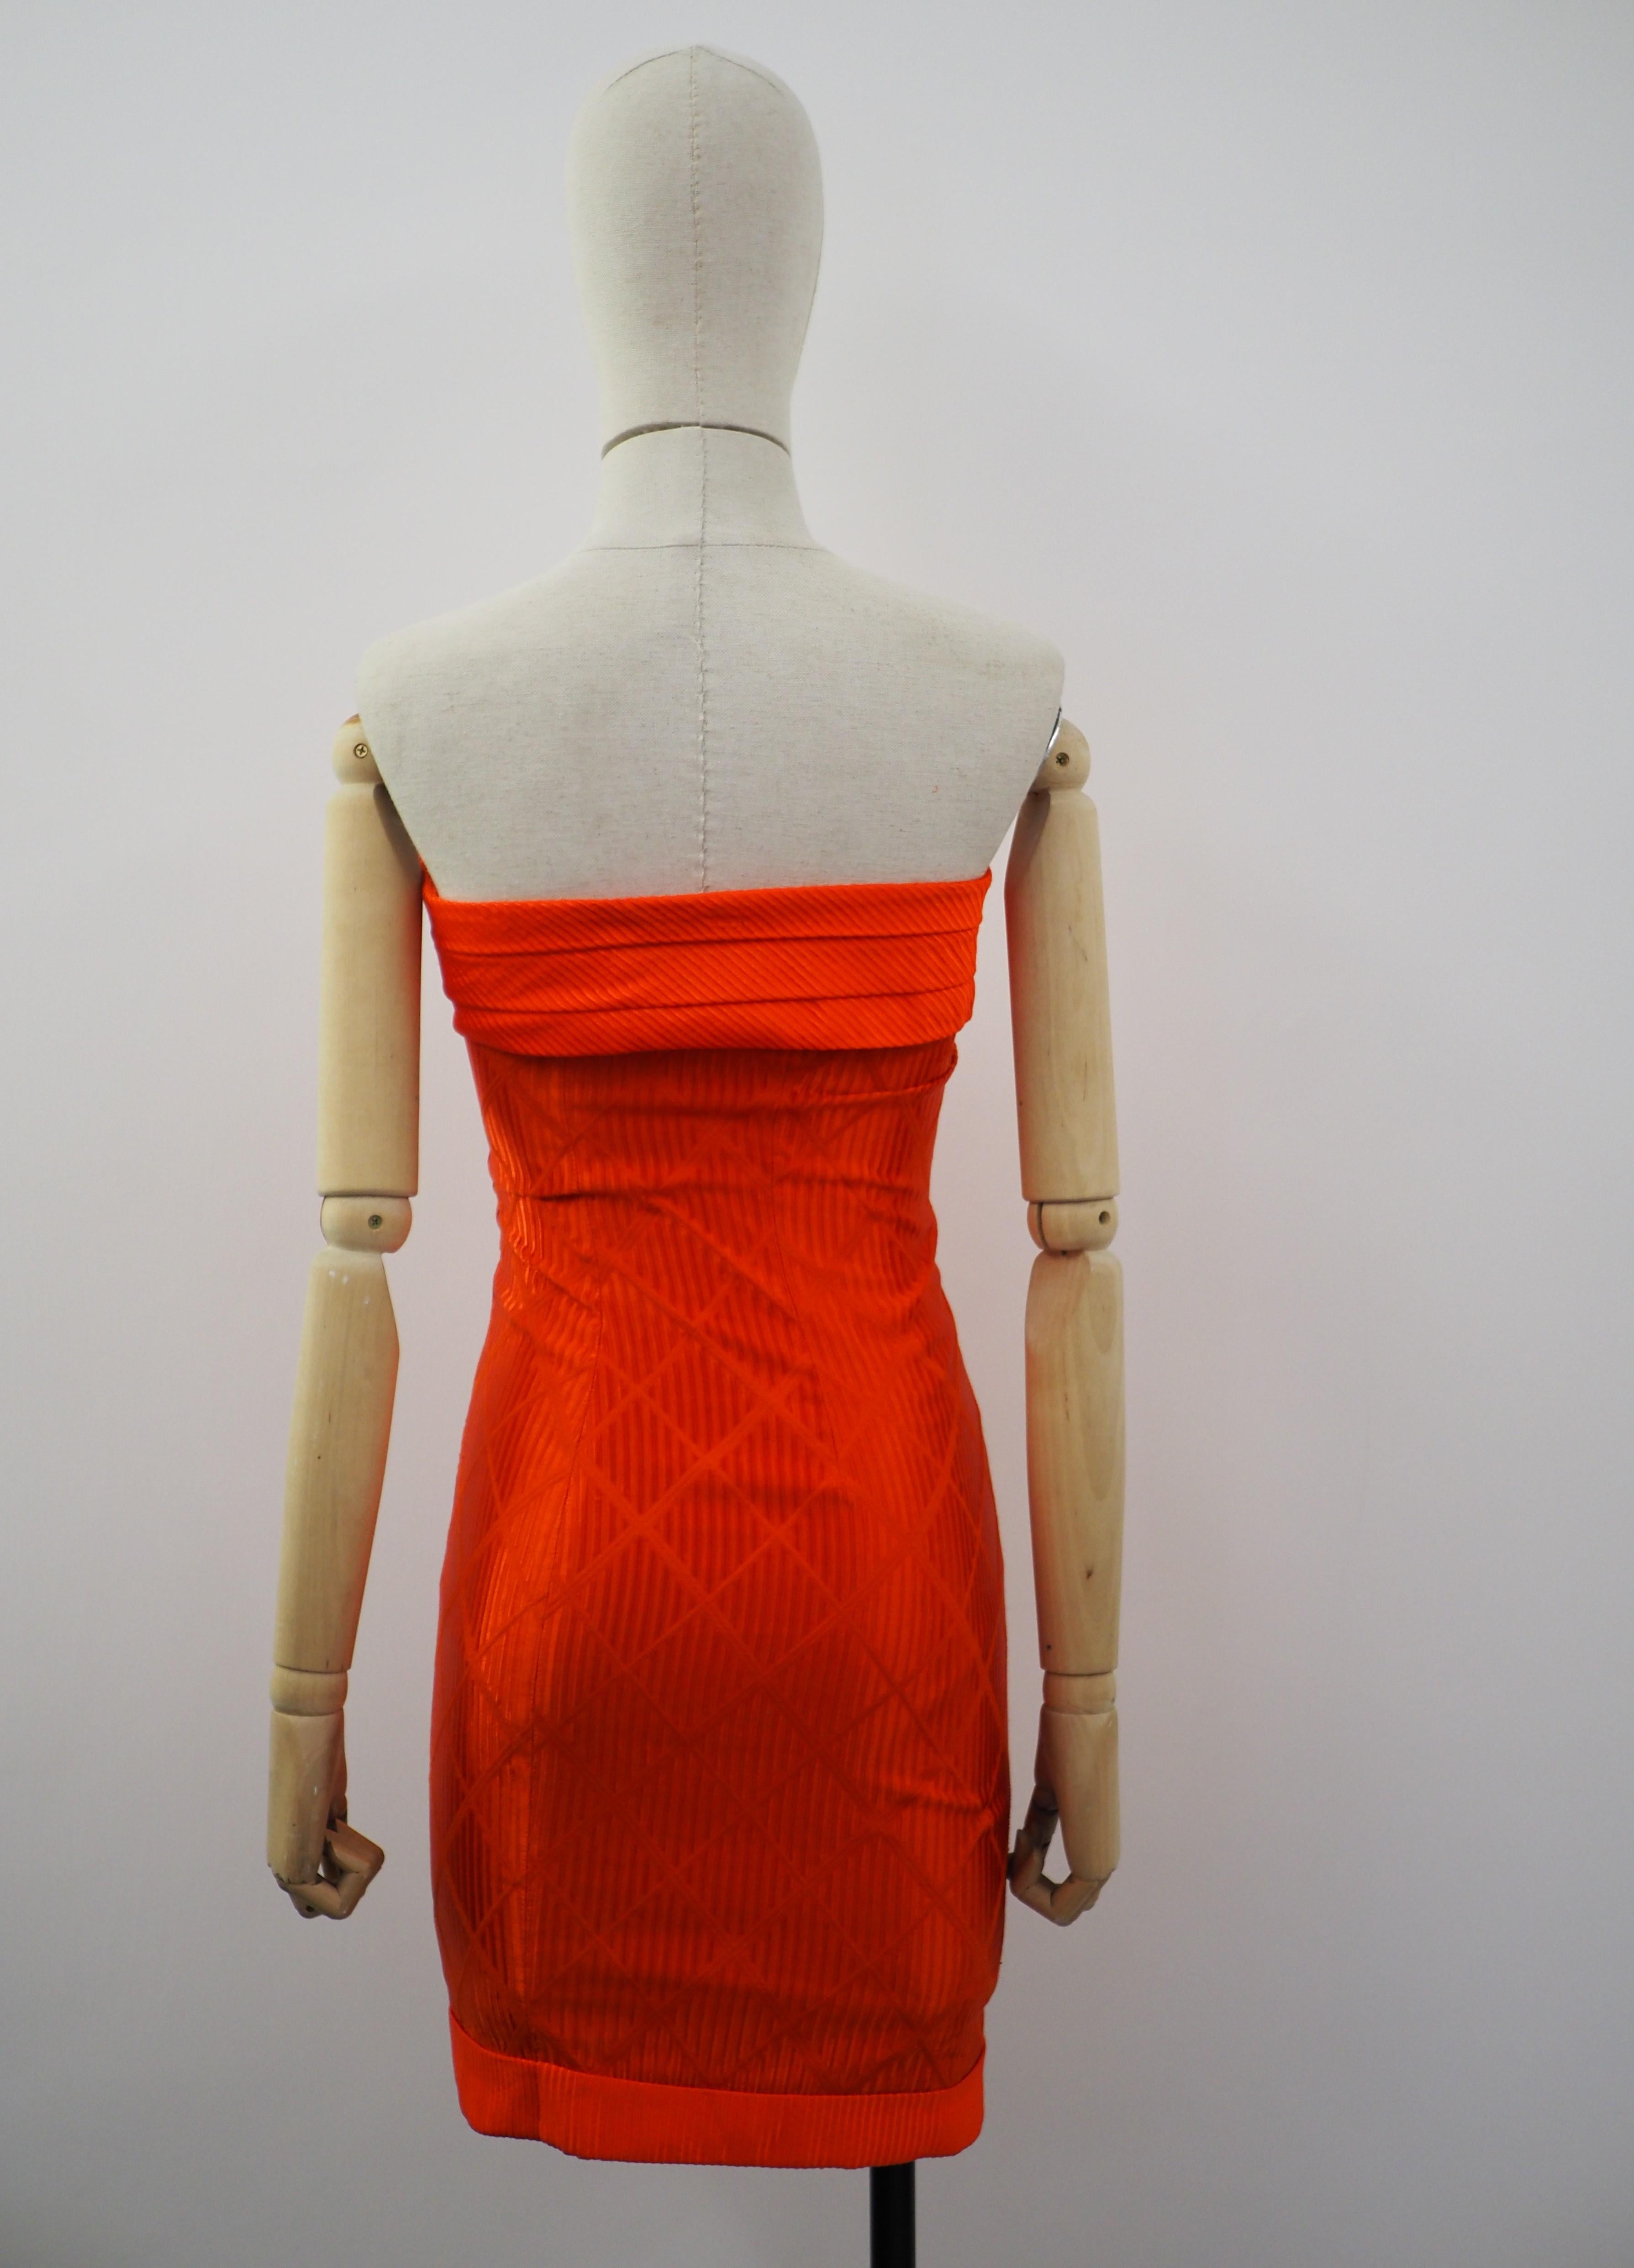 Versus by Gianni Versace orange dress 4